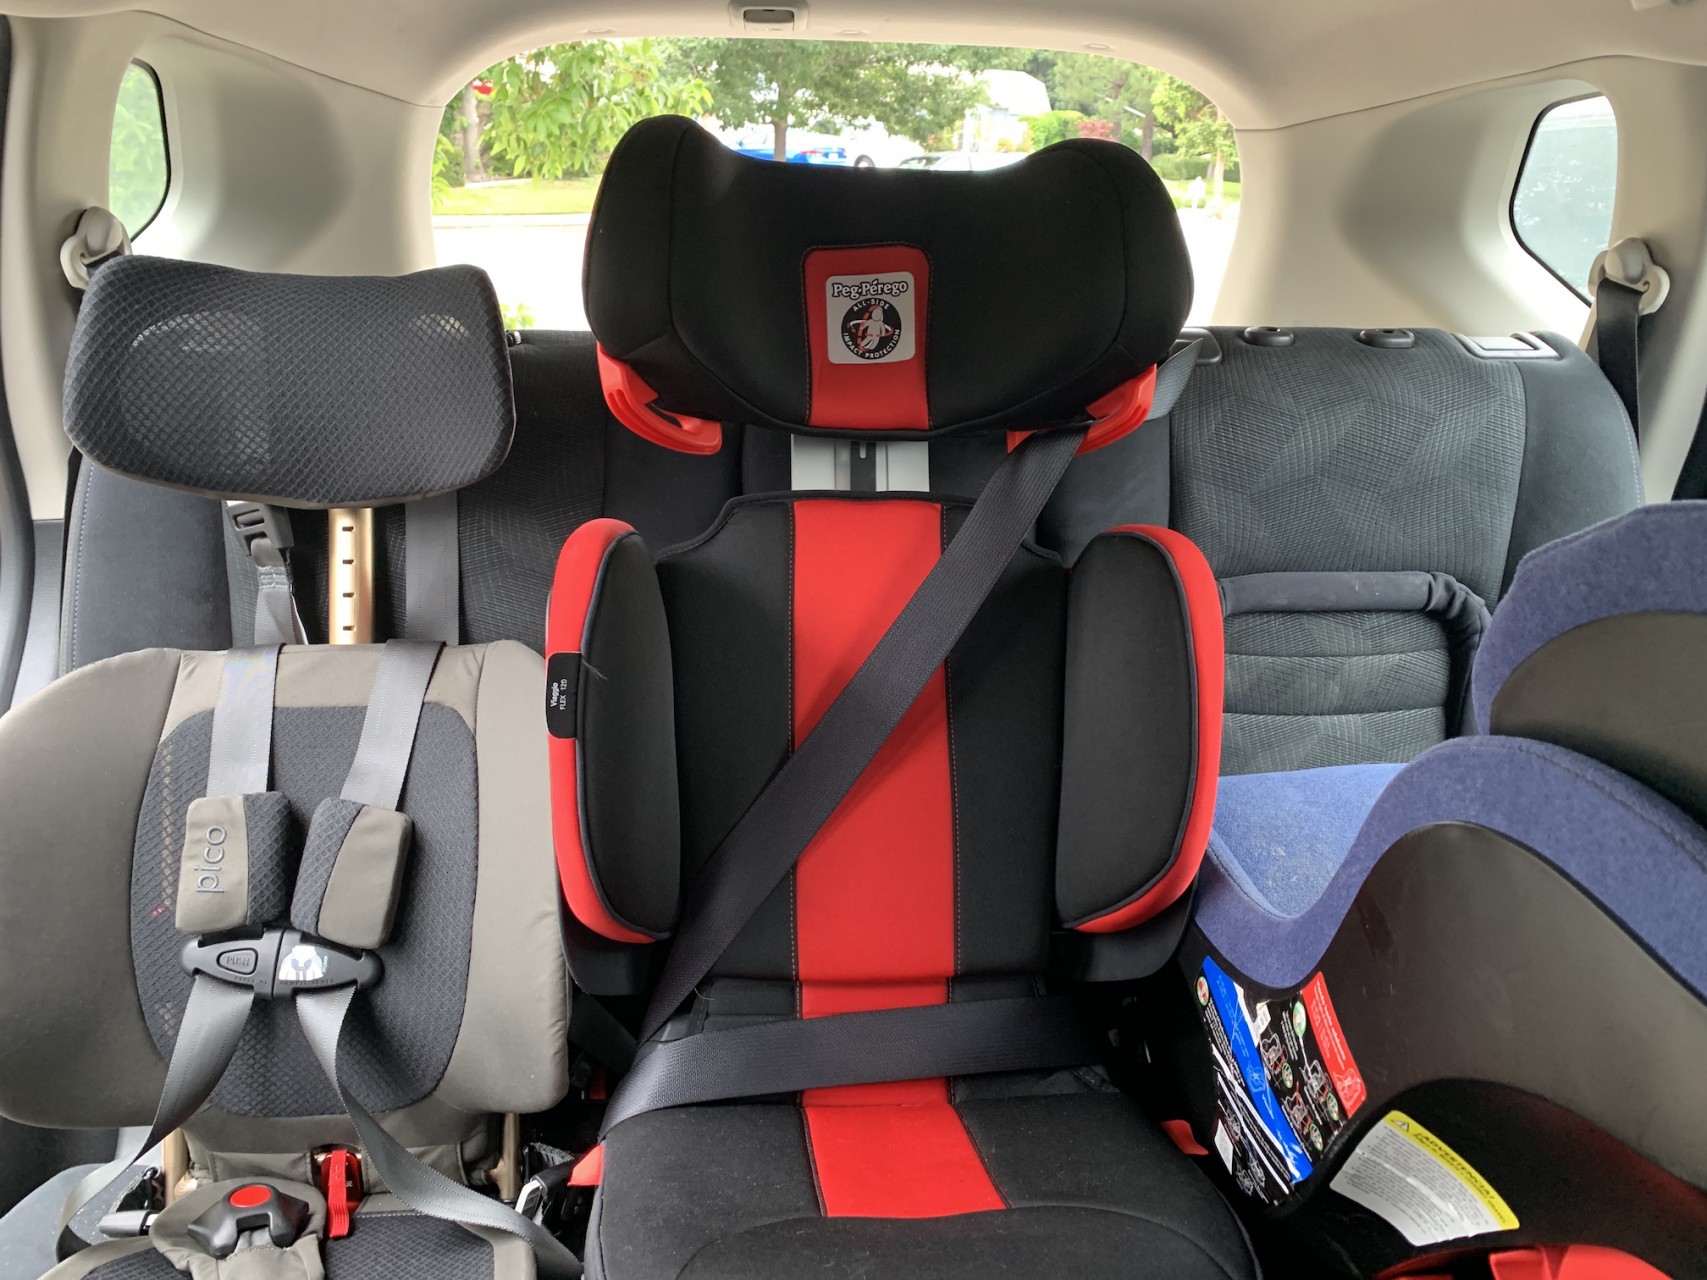 WAYB Pico Infant Car Seat reviews in 2023